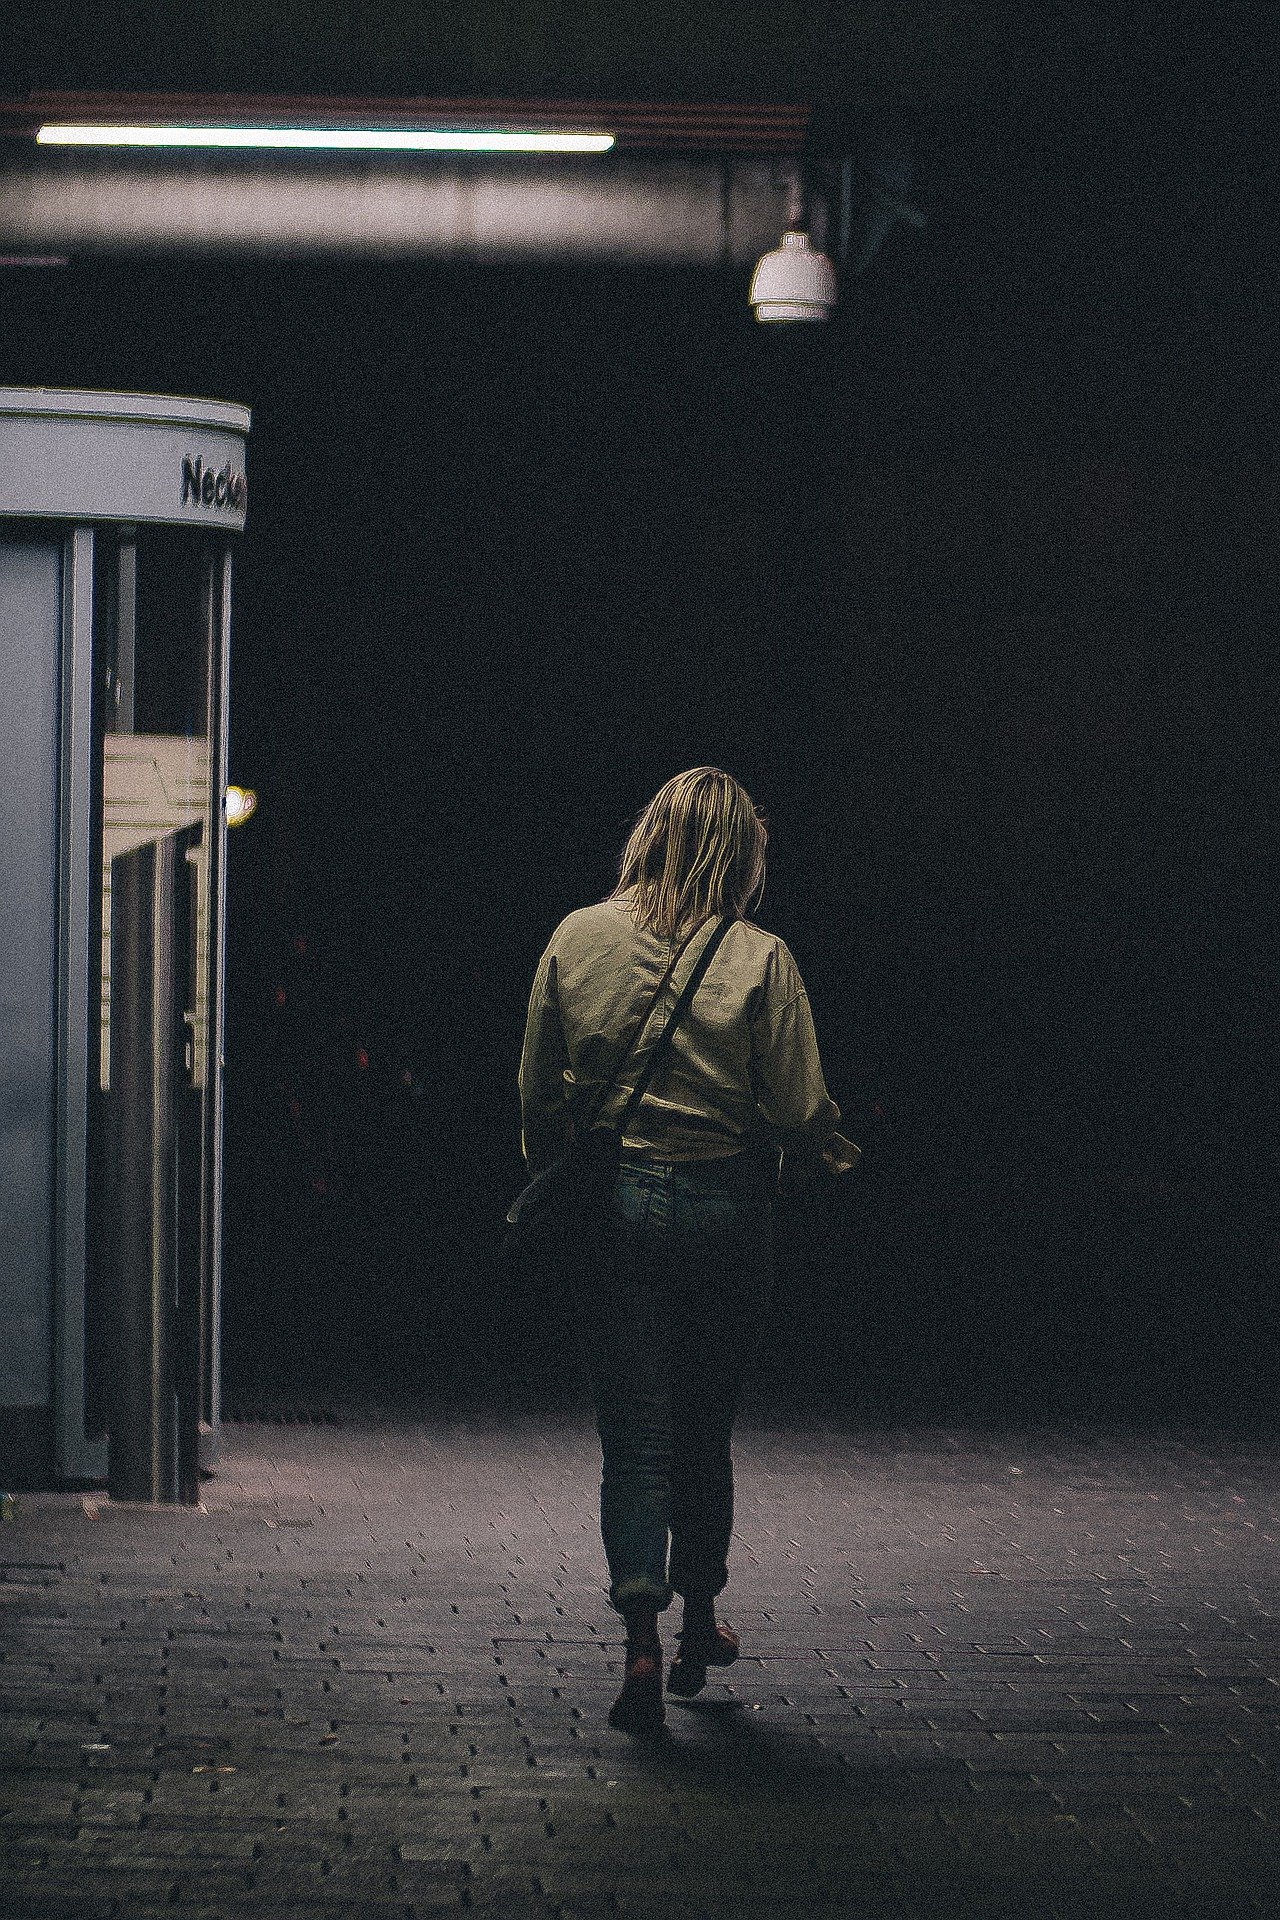 a woman walks down a street in the dark